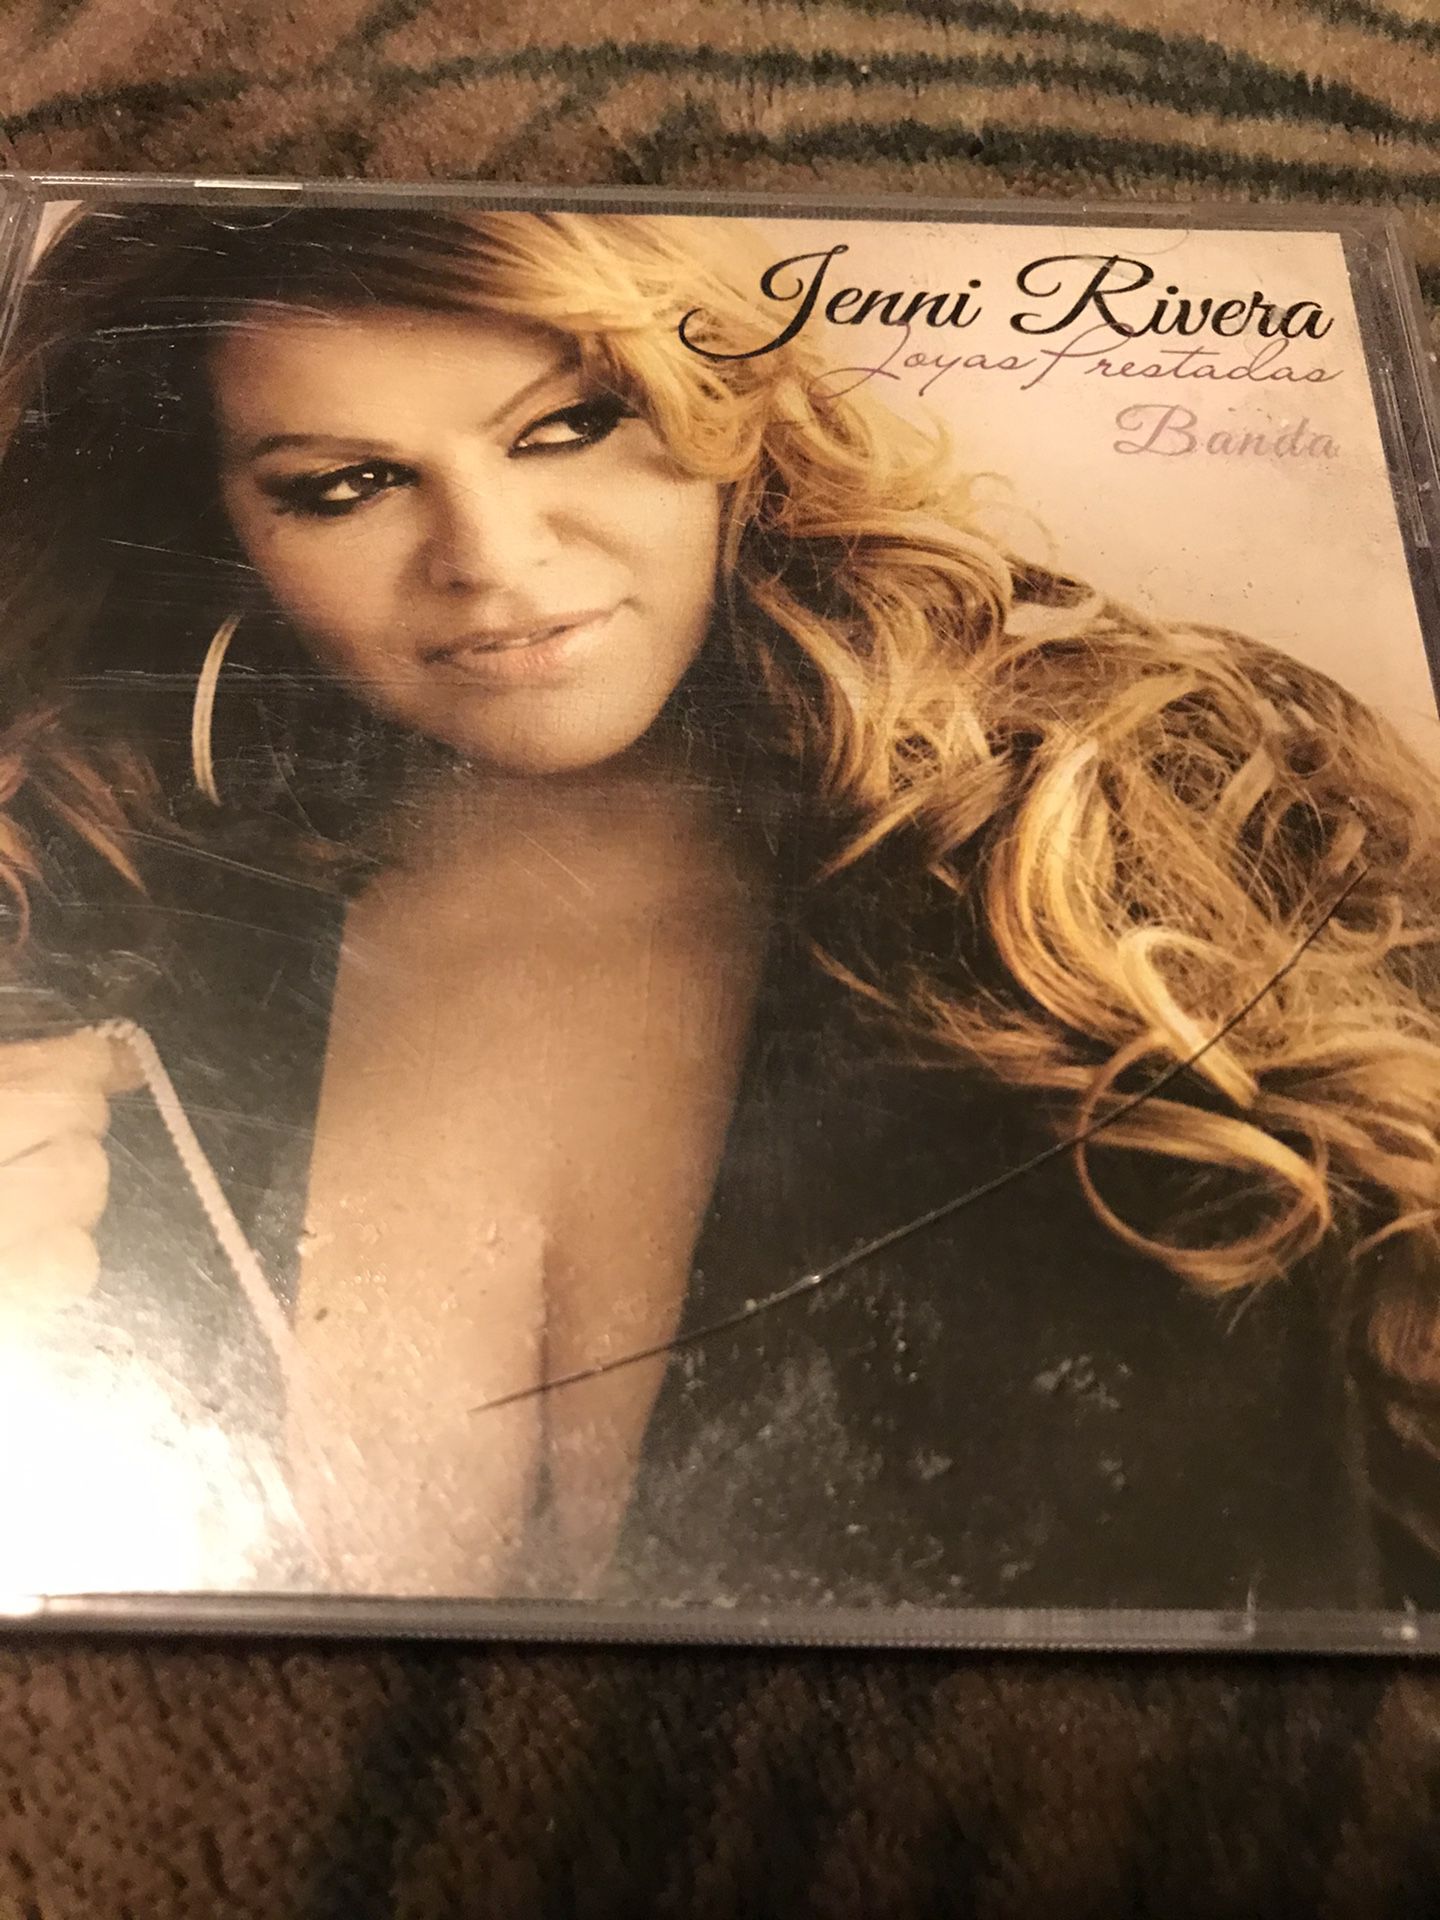 !! Jenni Rivera Spanish CD "Banda"